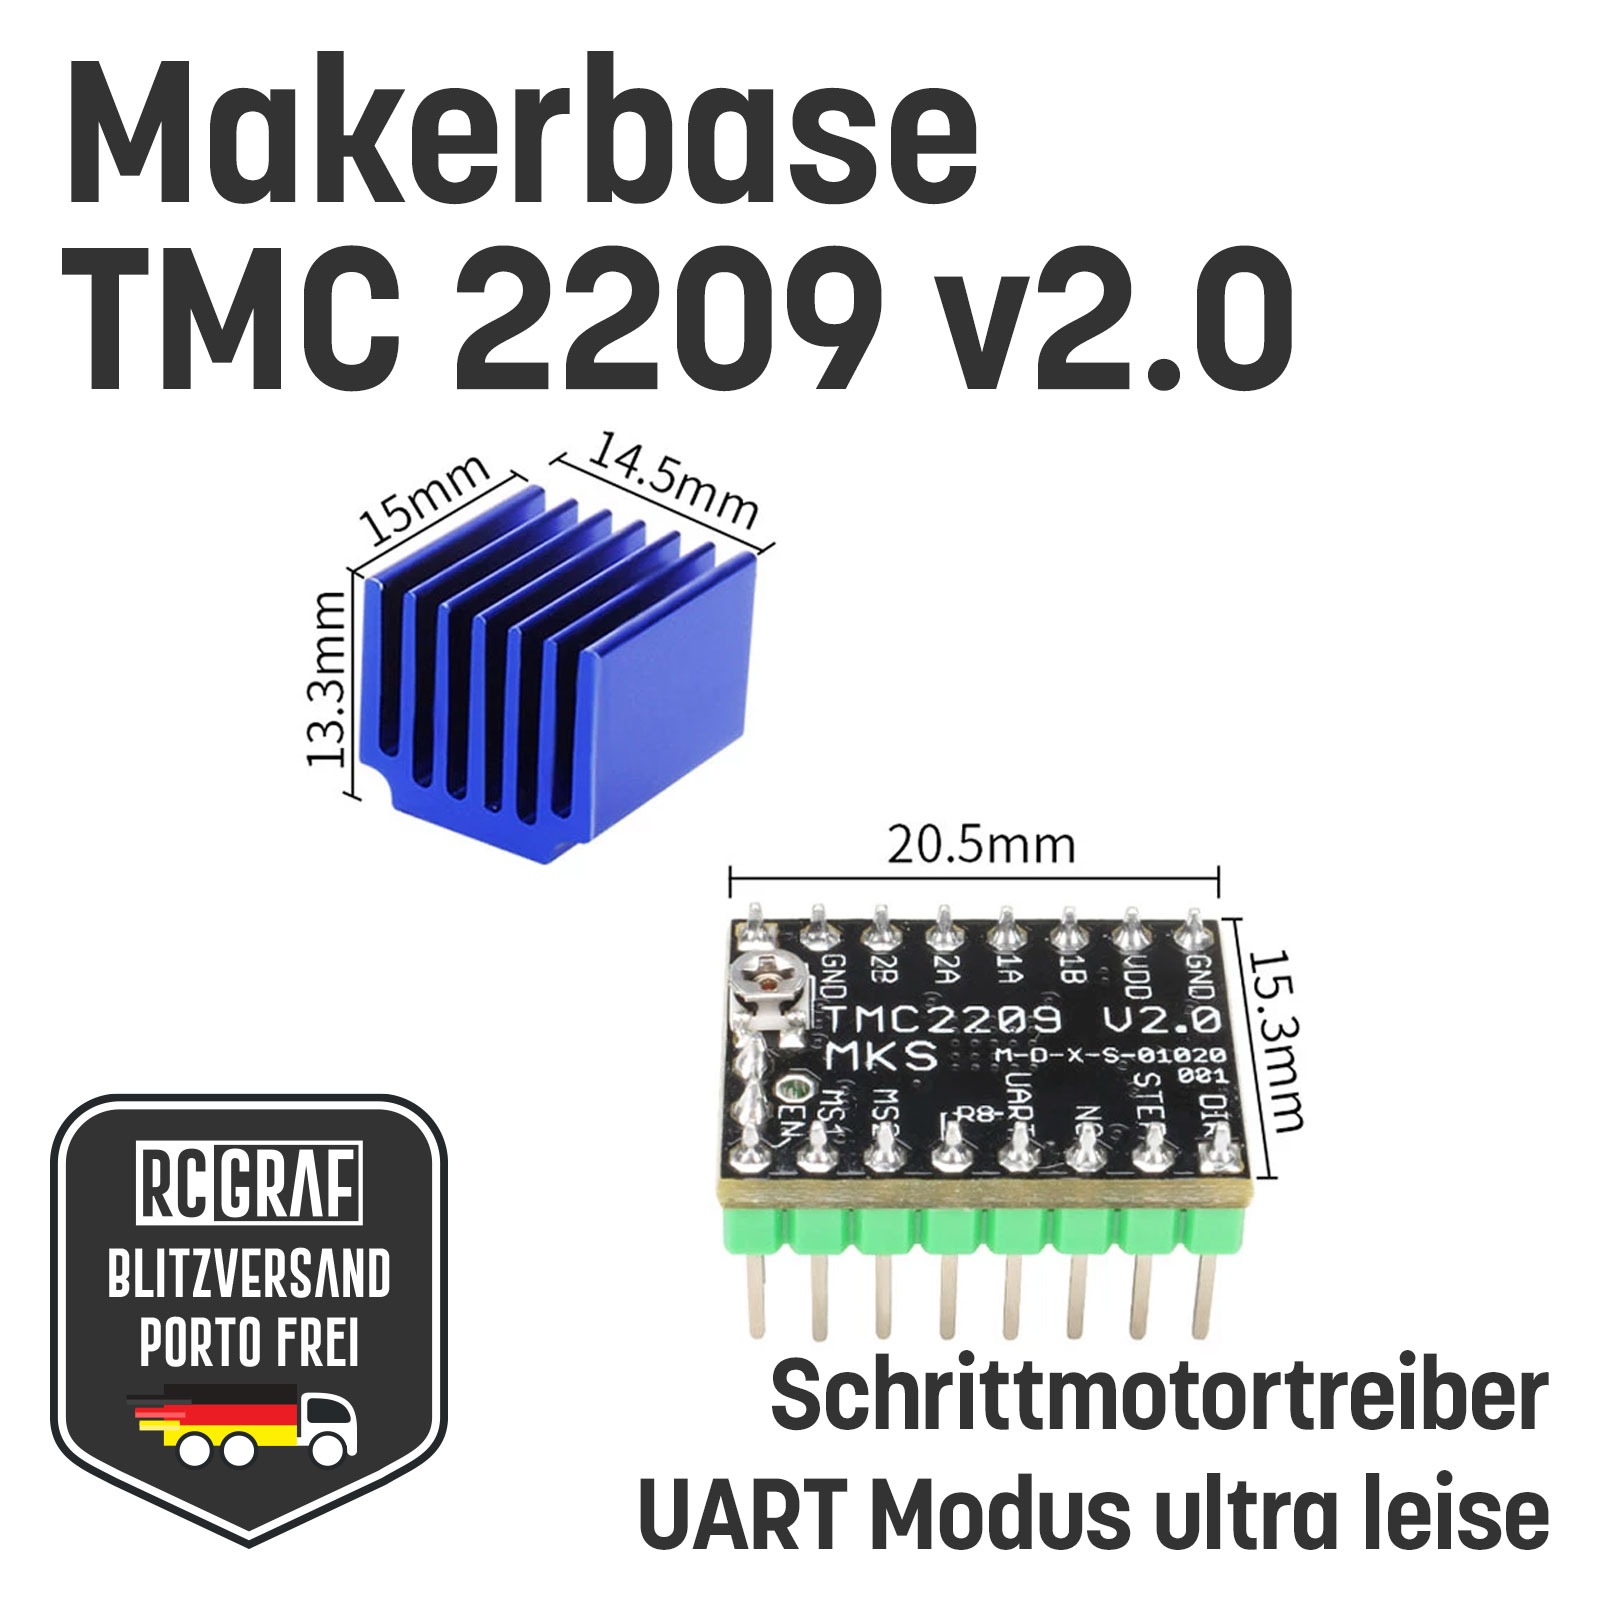 Makerbase TMC2209 V20 Schrittmotortreiber UART Modus ultra leise 3